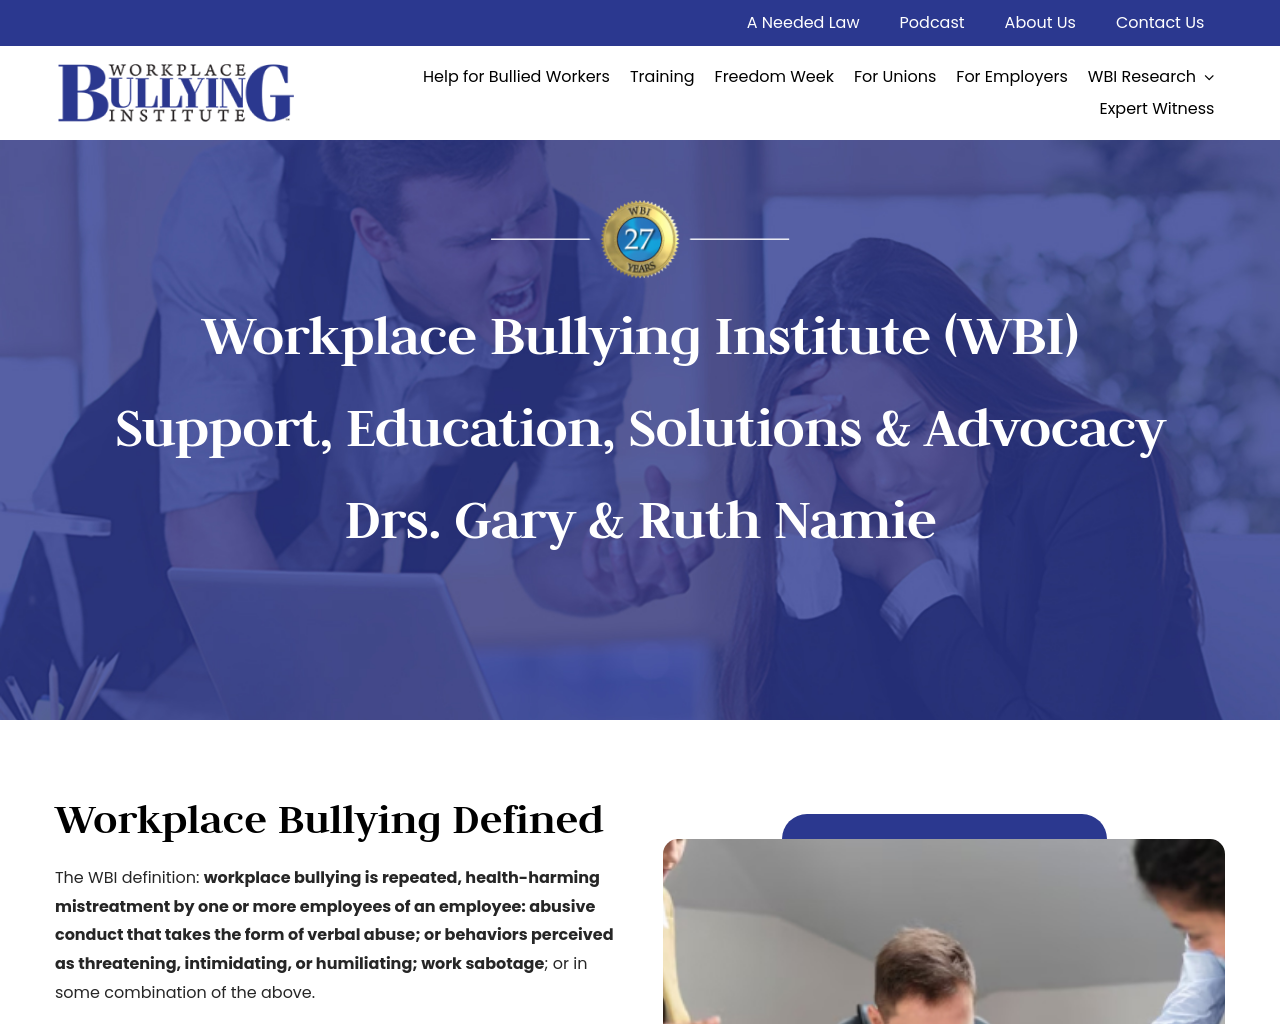 workplacebullying.org